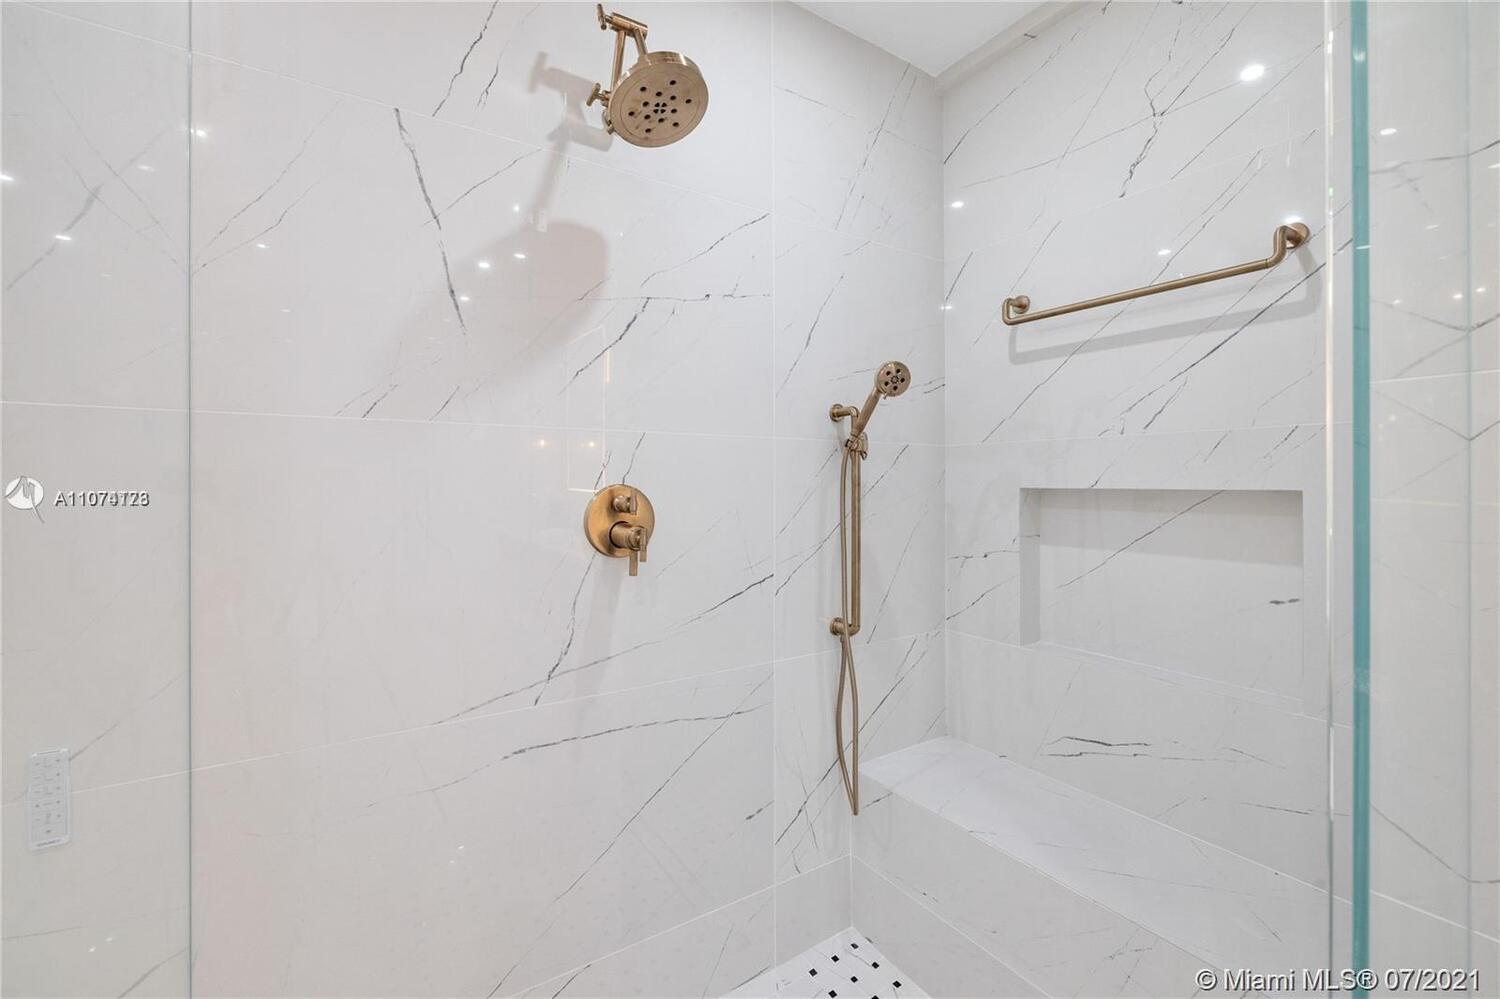 Bespoke bathroom designs